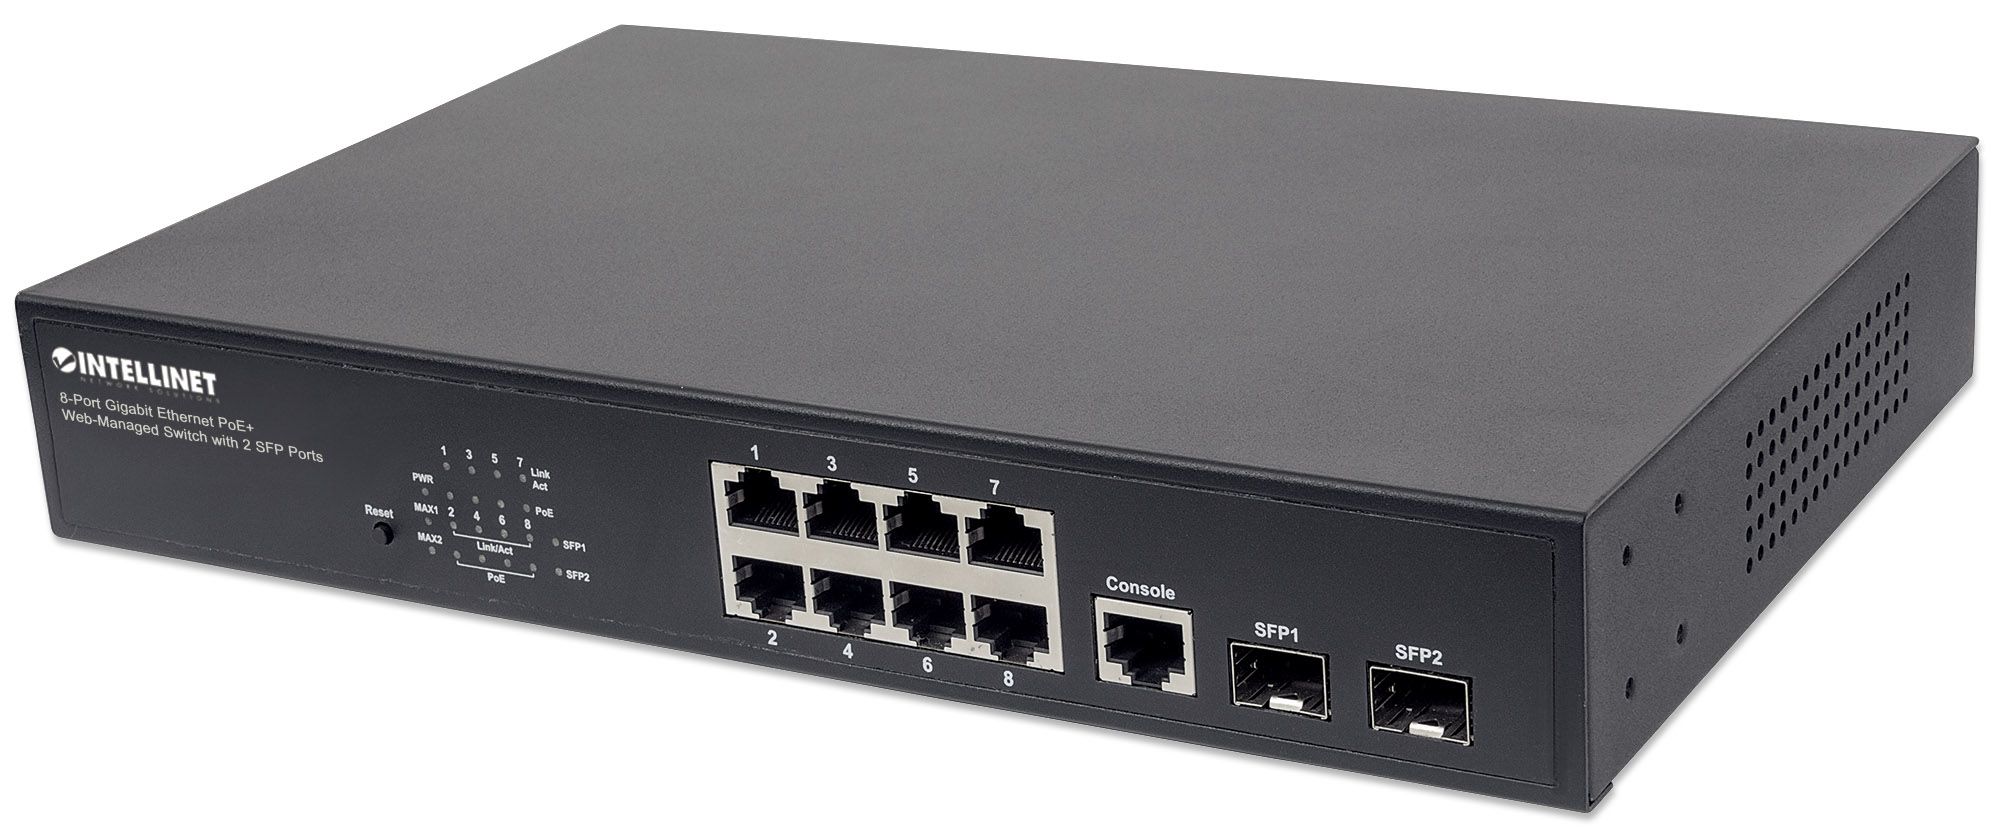 561082 | 8-Port Gigabit Ethernet PoE+ Web-Managed Switch with 2 SFP Ports